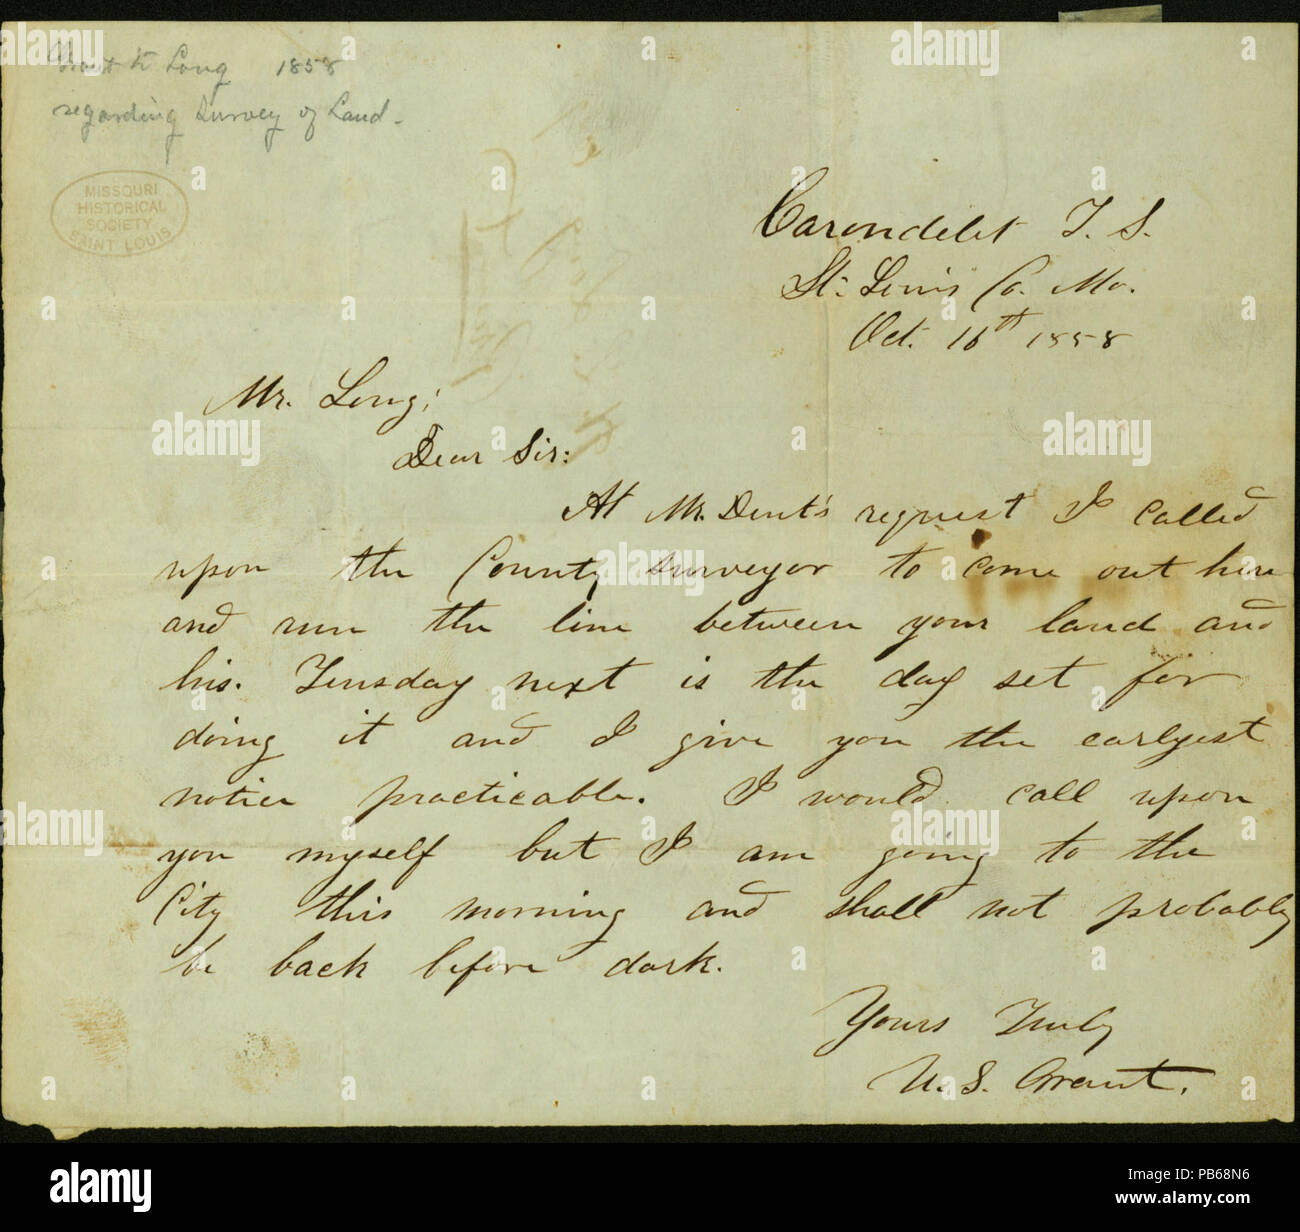 913 Letter signed U.S. Grant, Carondelet, St. Louis Co., Mo., to Mr. Long (John F. Long), October 16, 1858 Stock Photo